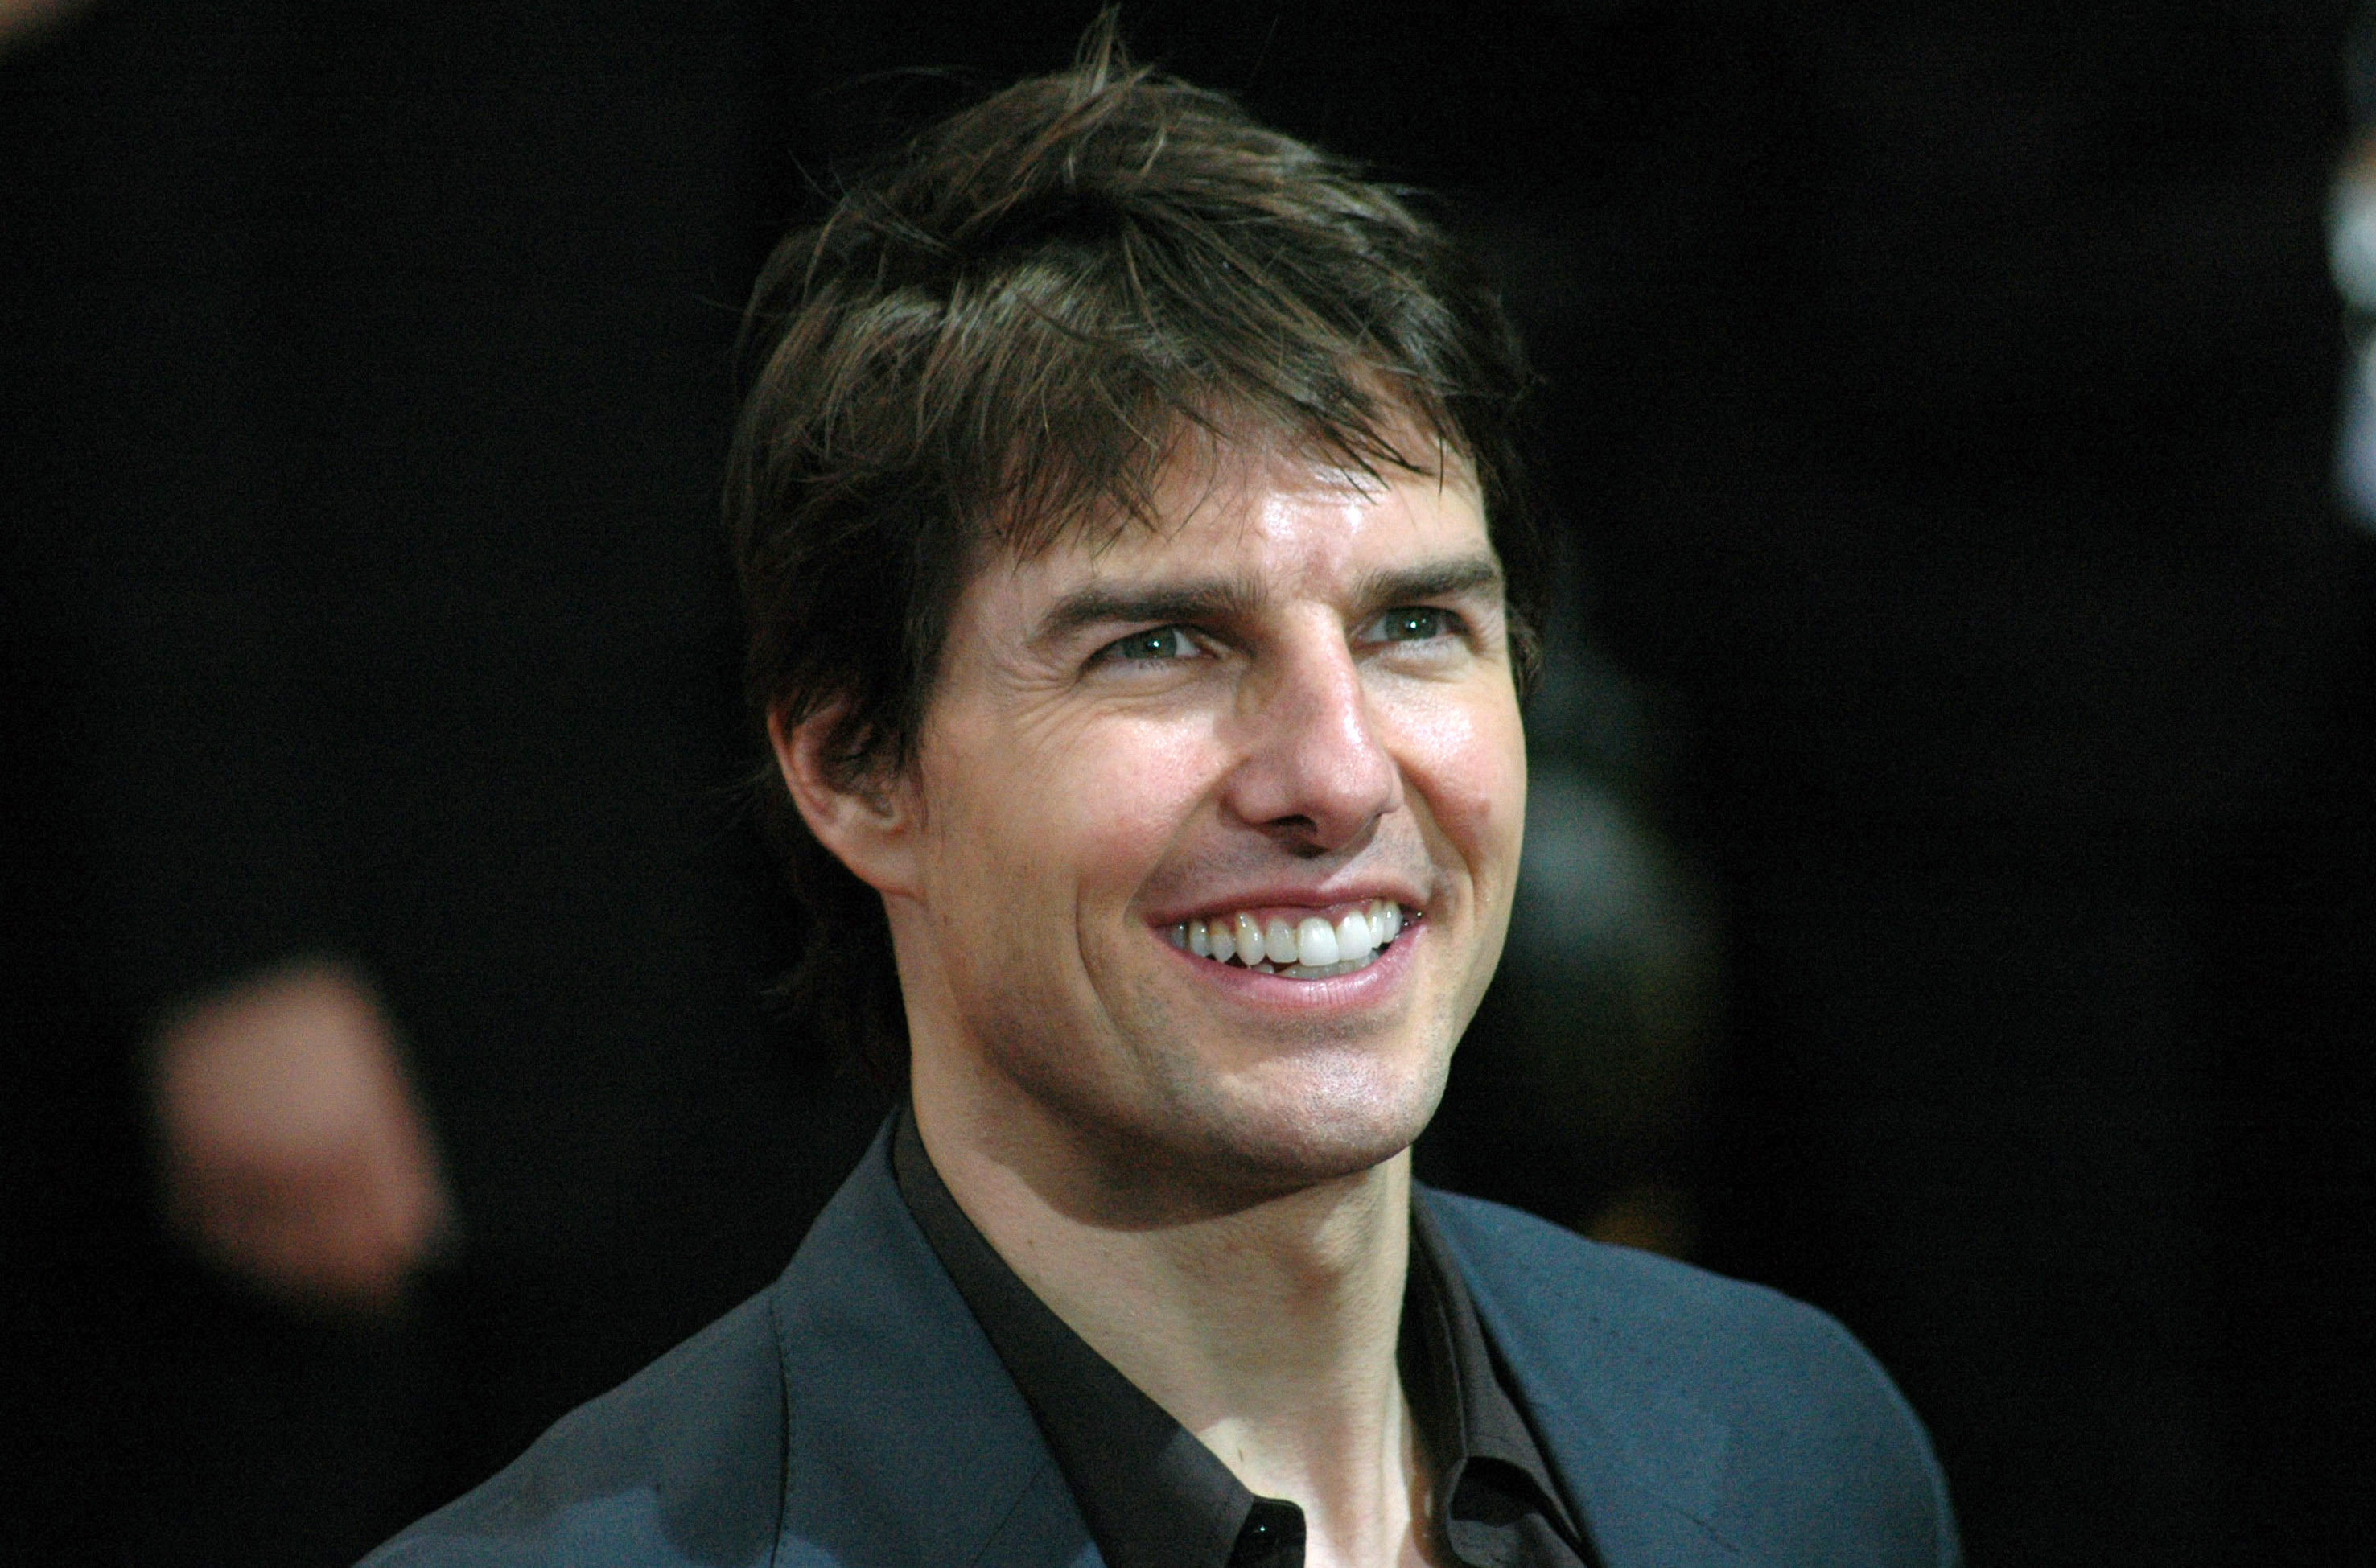 Tom Cruise, An Eternal Youth